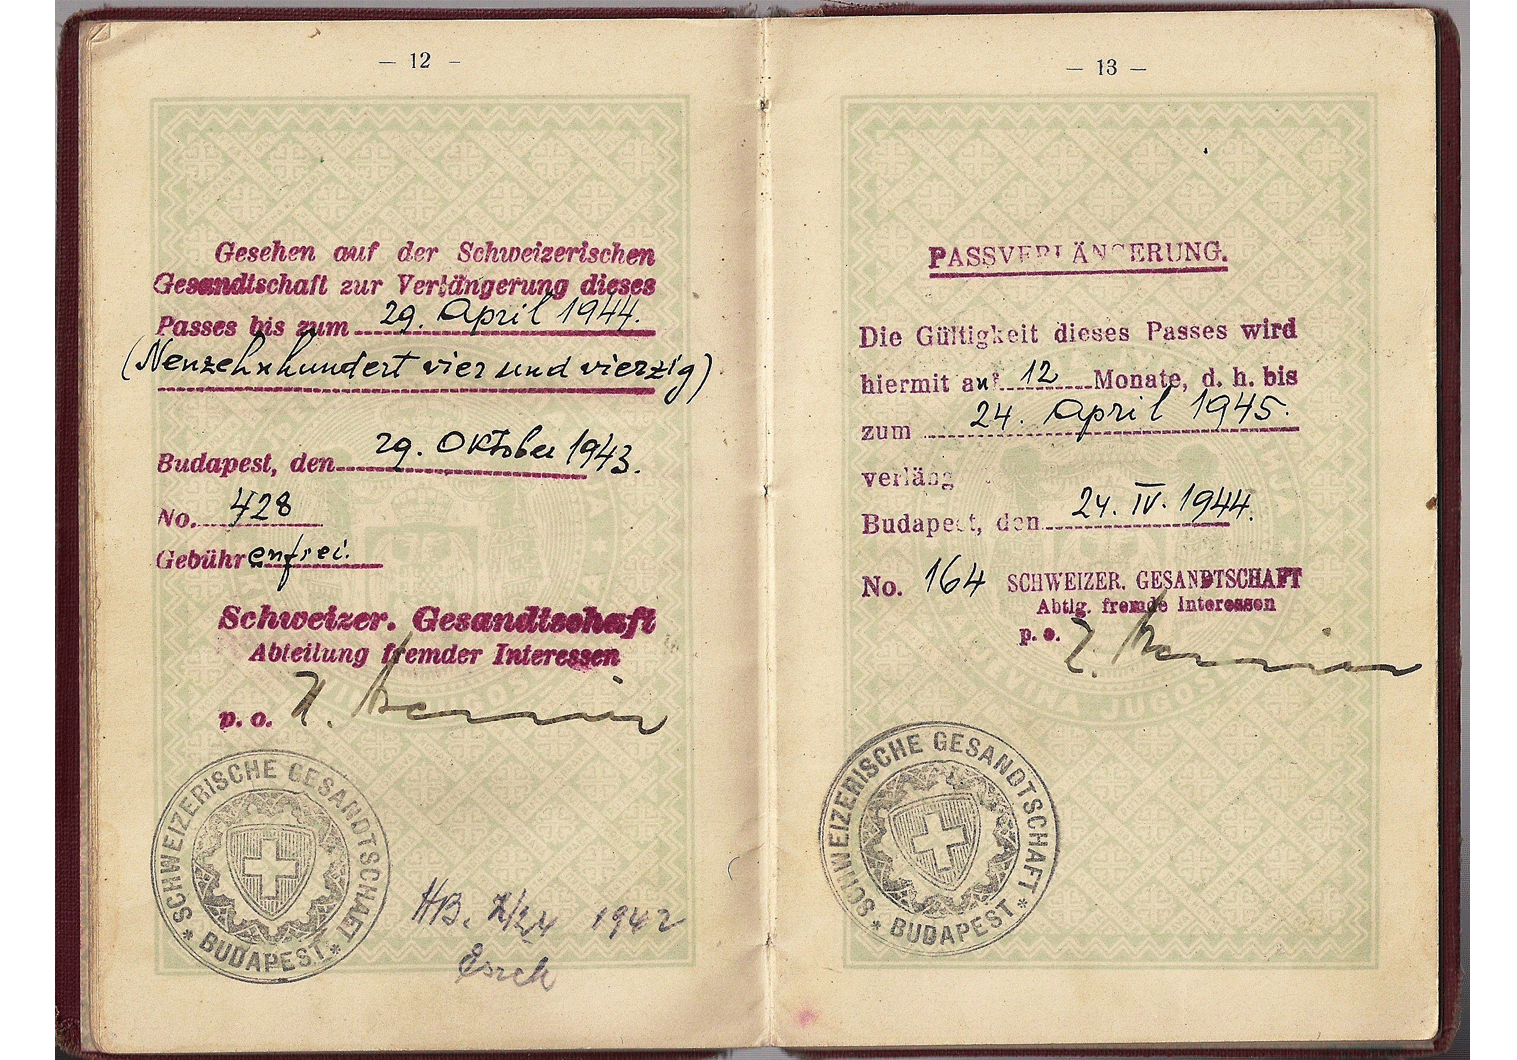 Budapest 1944 visa passport